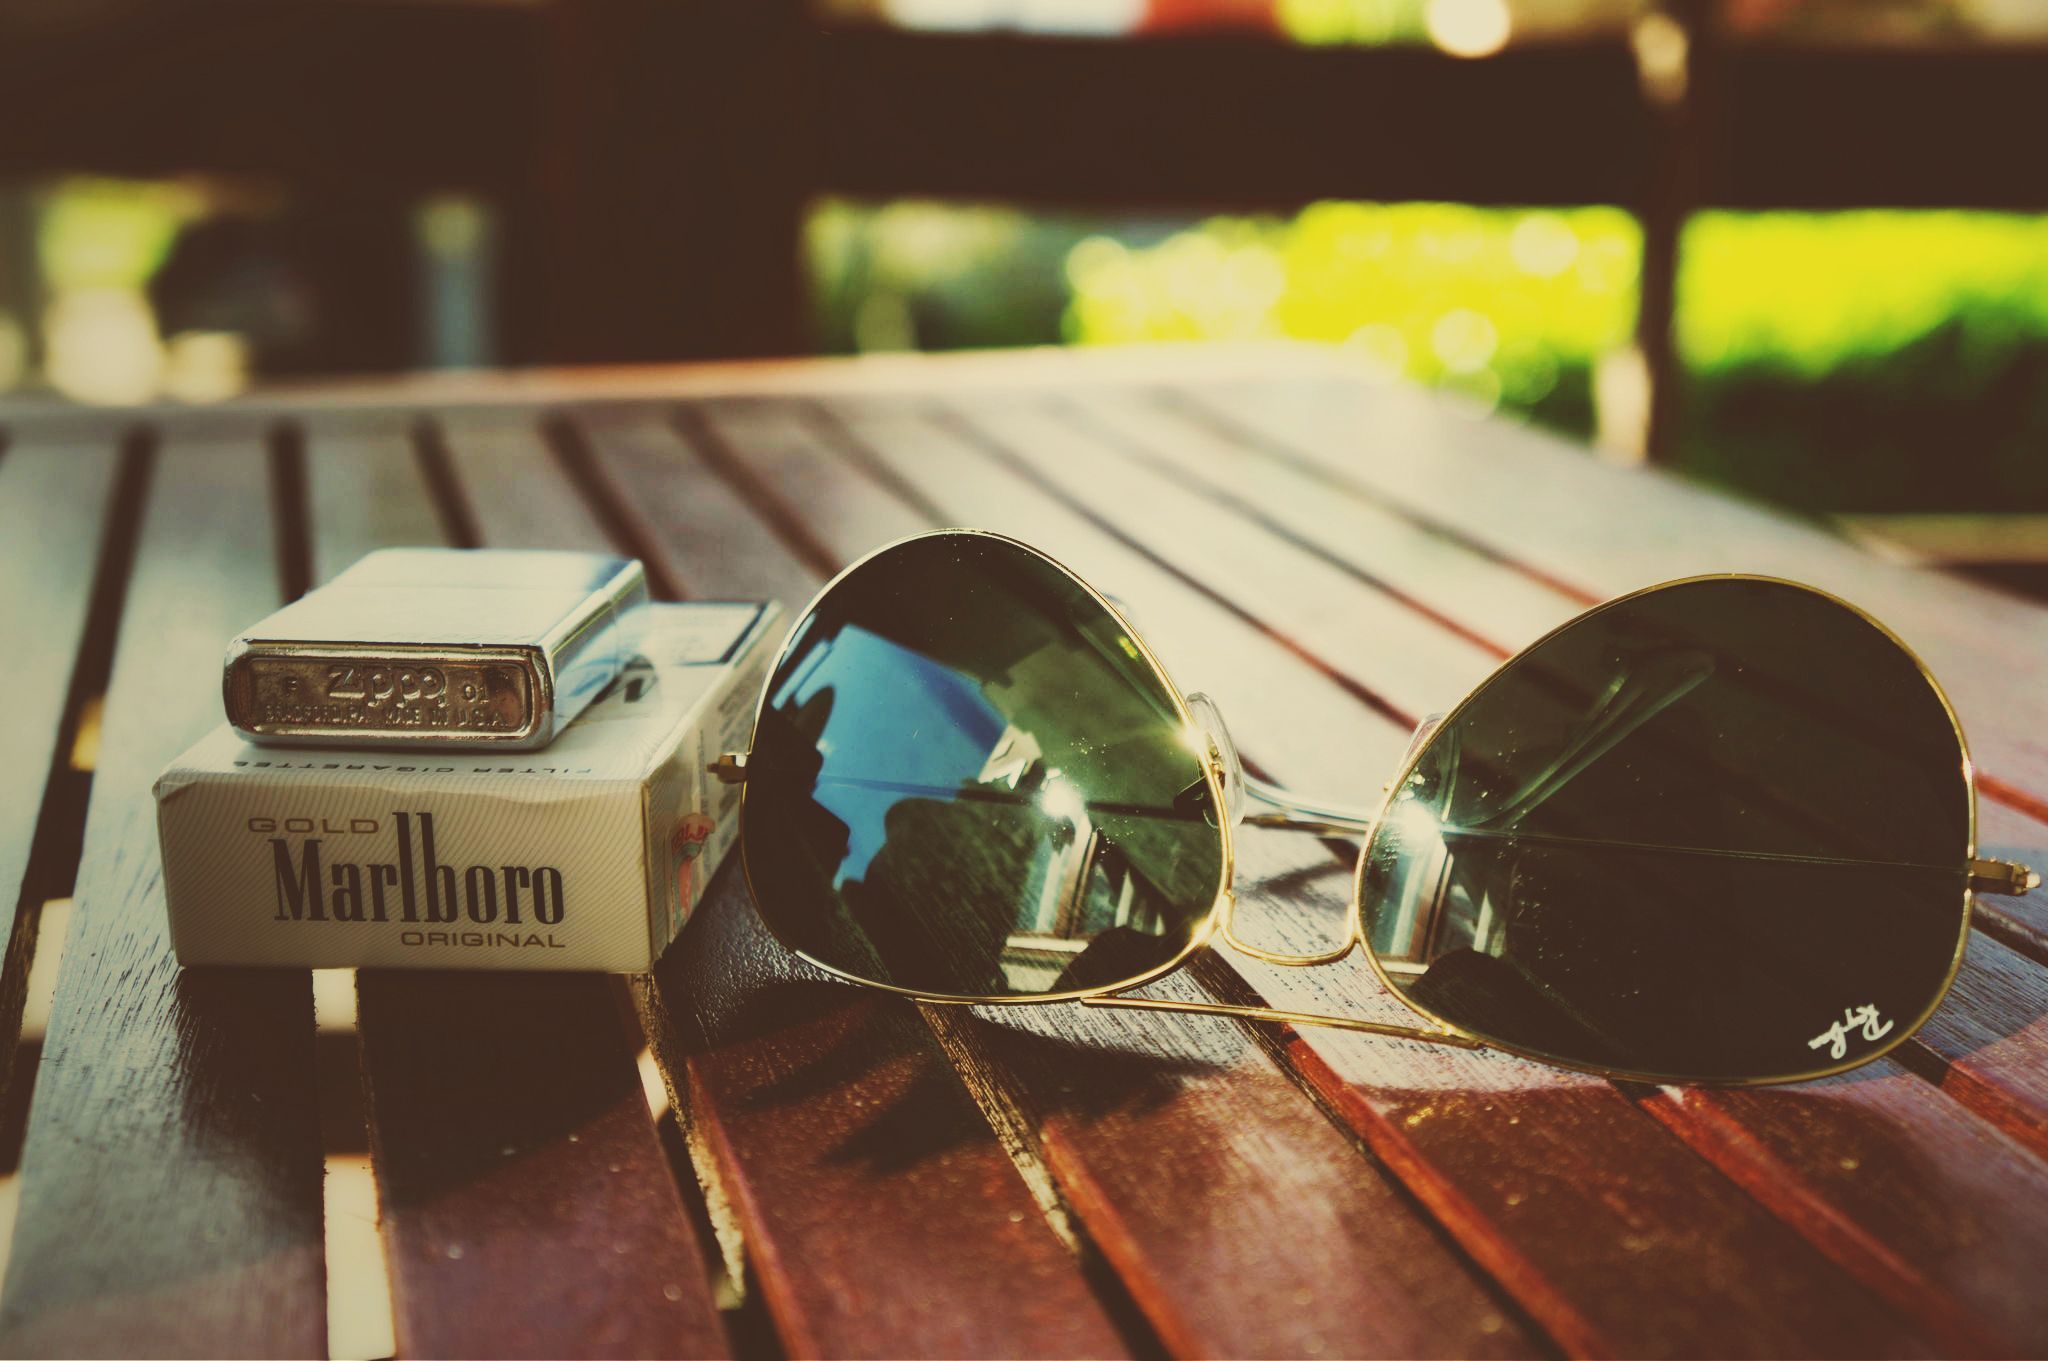 Ray Ban Zippo Marlboro Lighter Cigarette Glasses wallpaper by